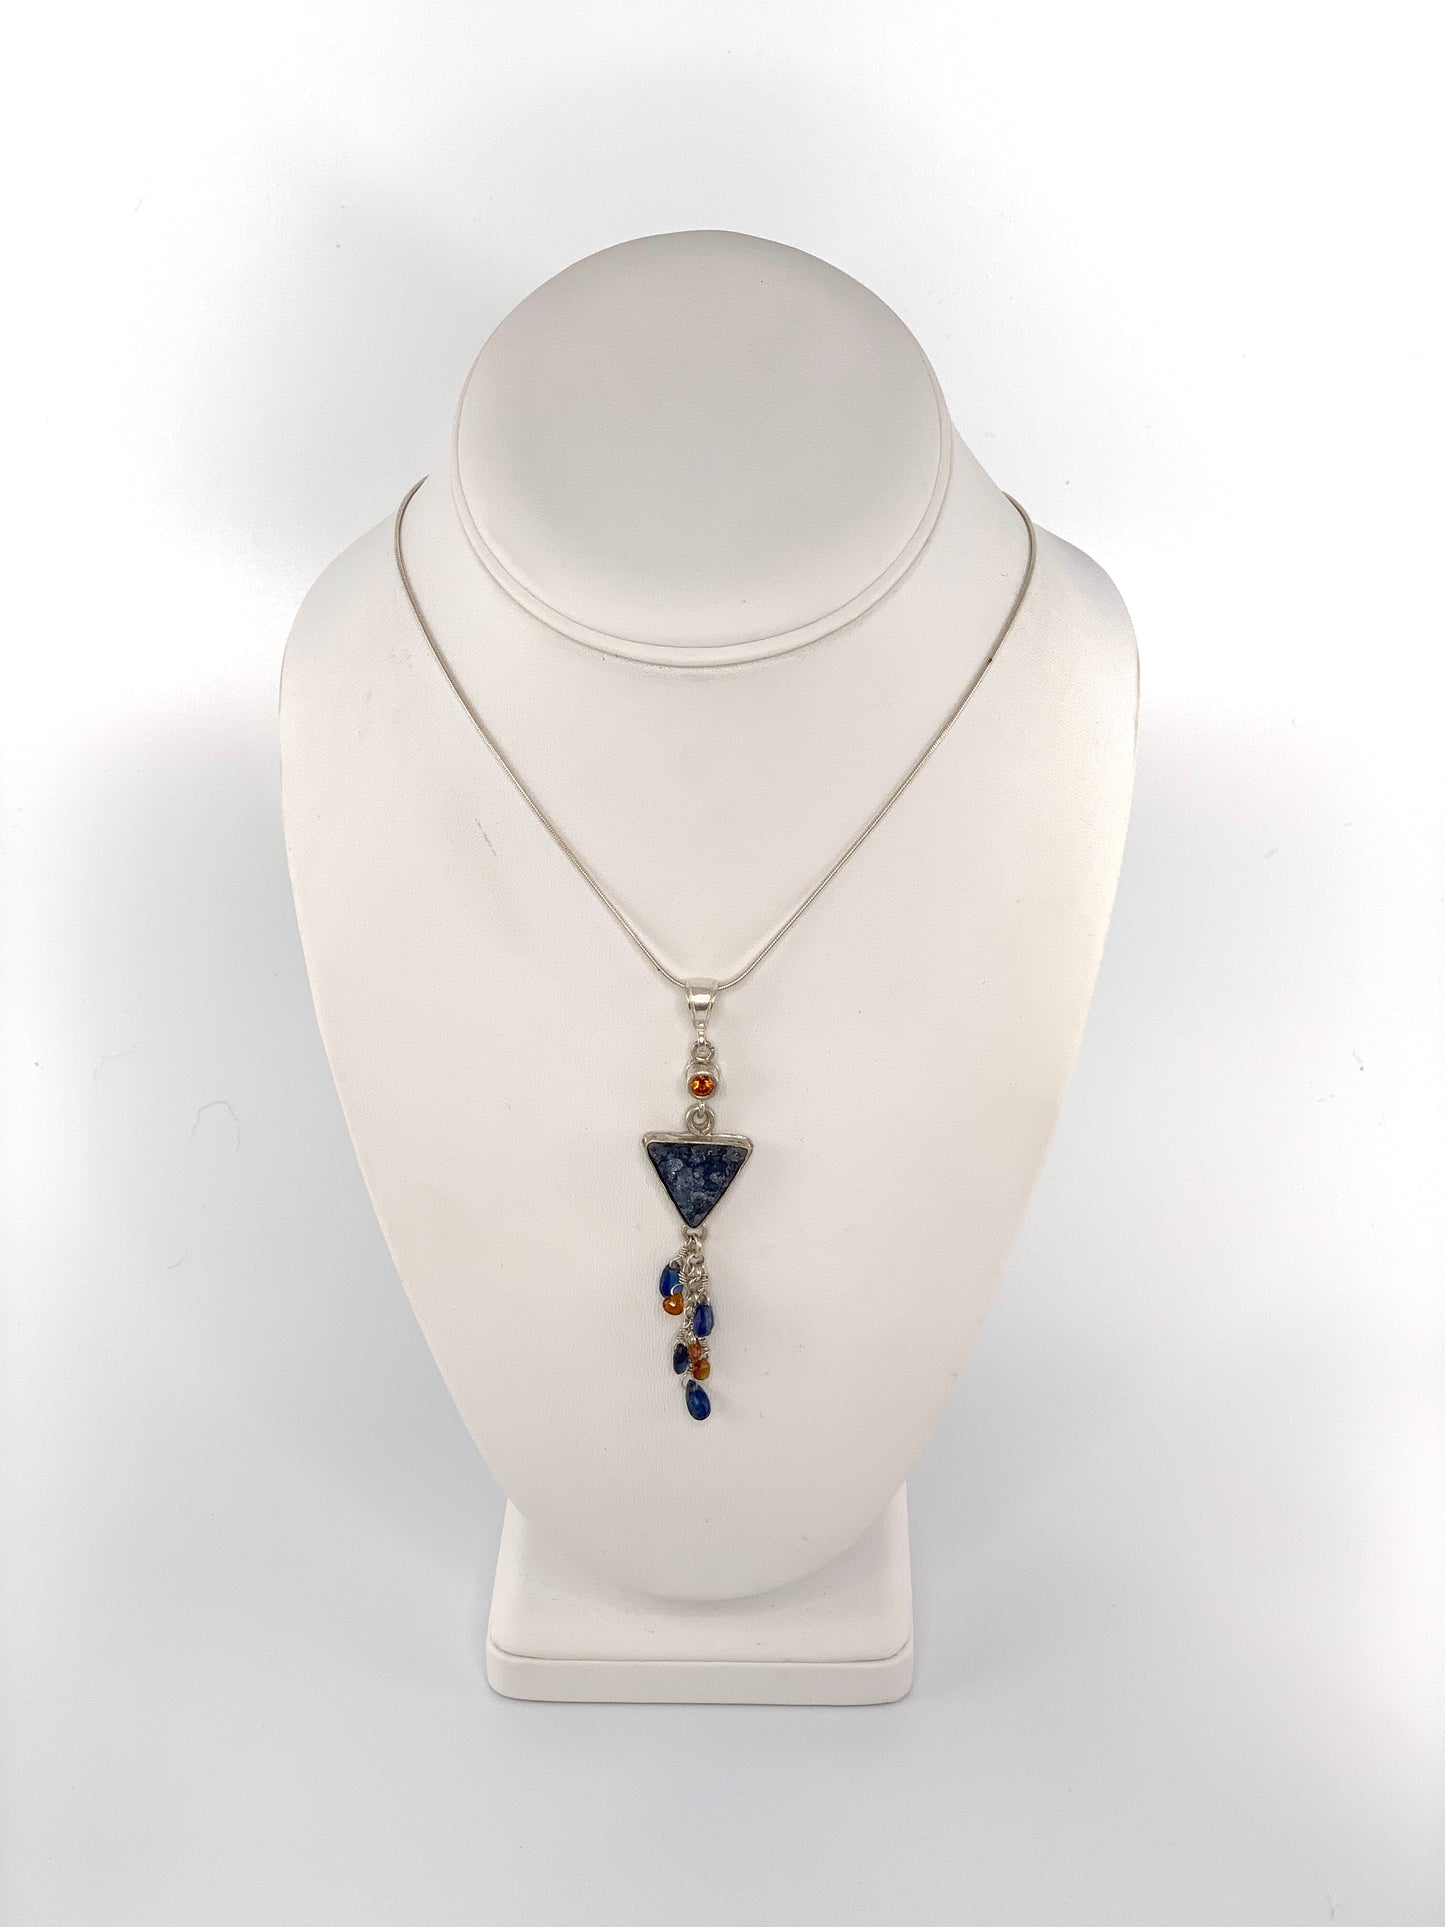 Blue Druzy Triangular Pendant Necklace